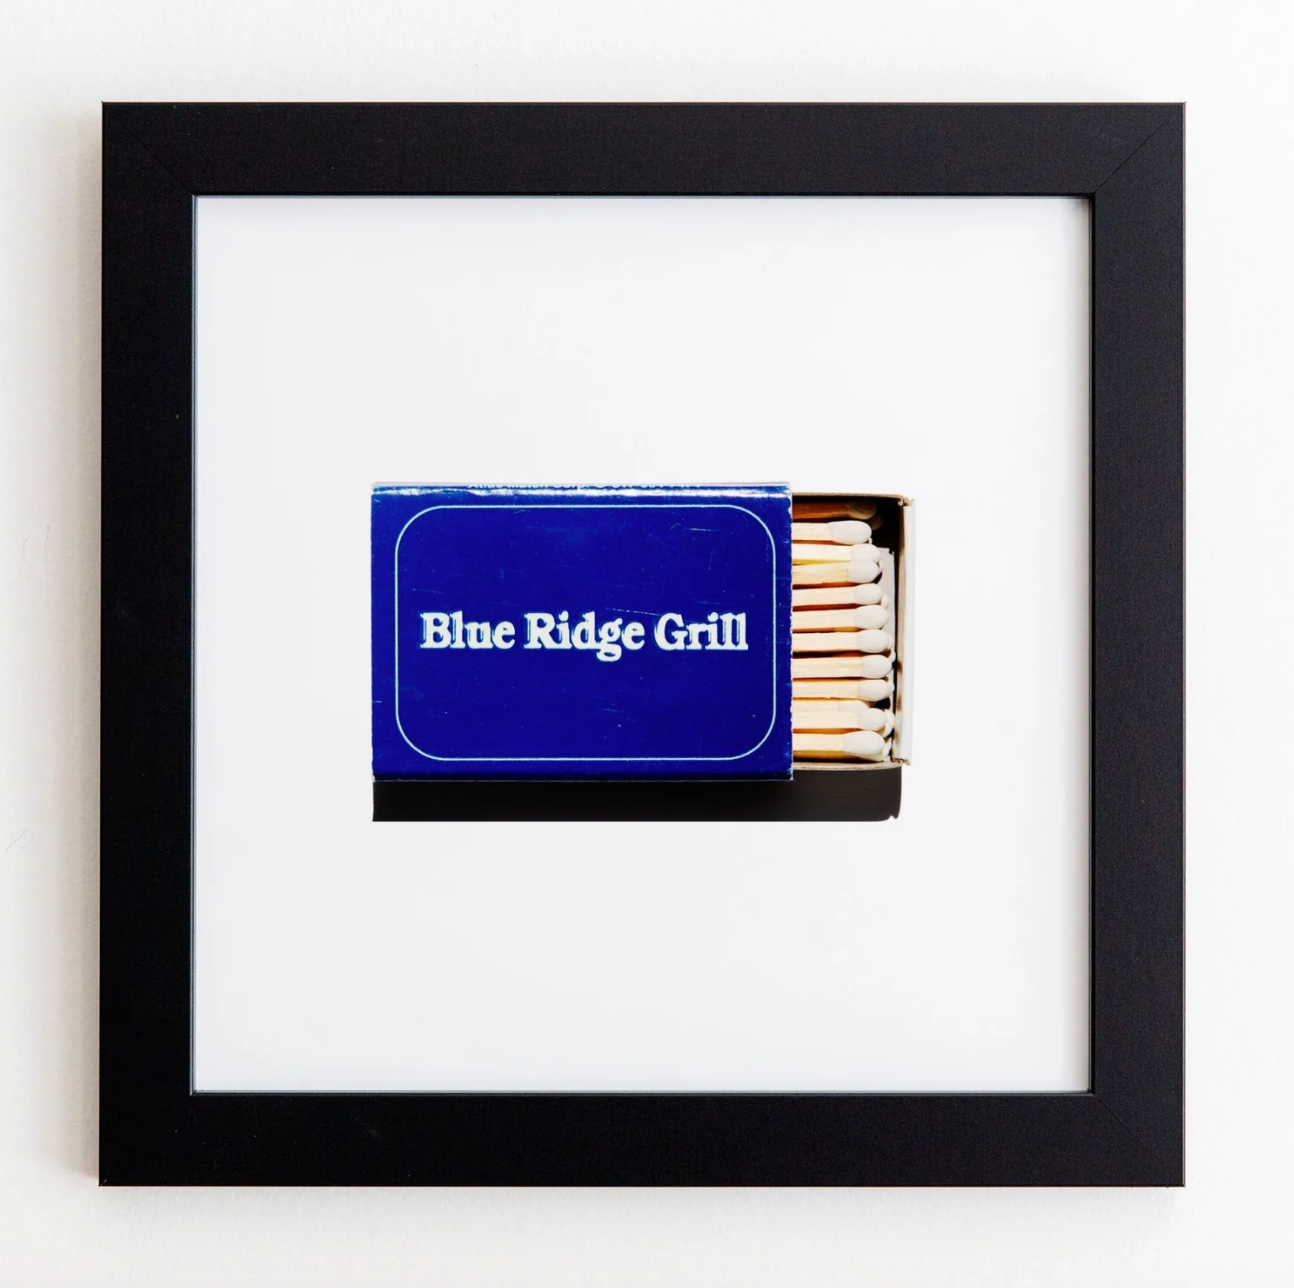 Blue Ridge Grill (Black Frame)